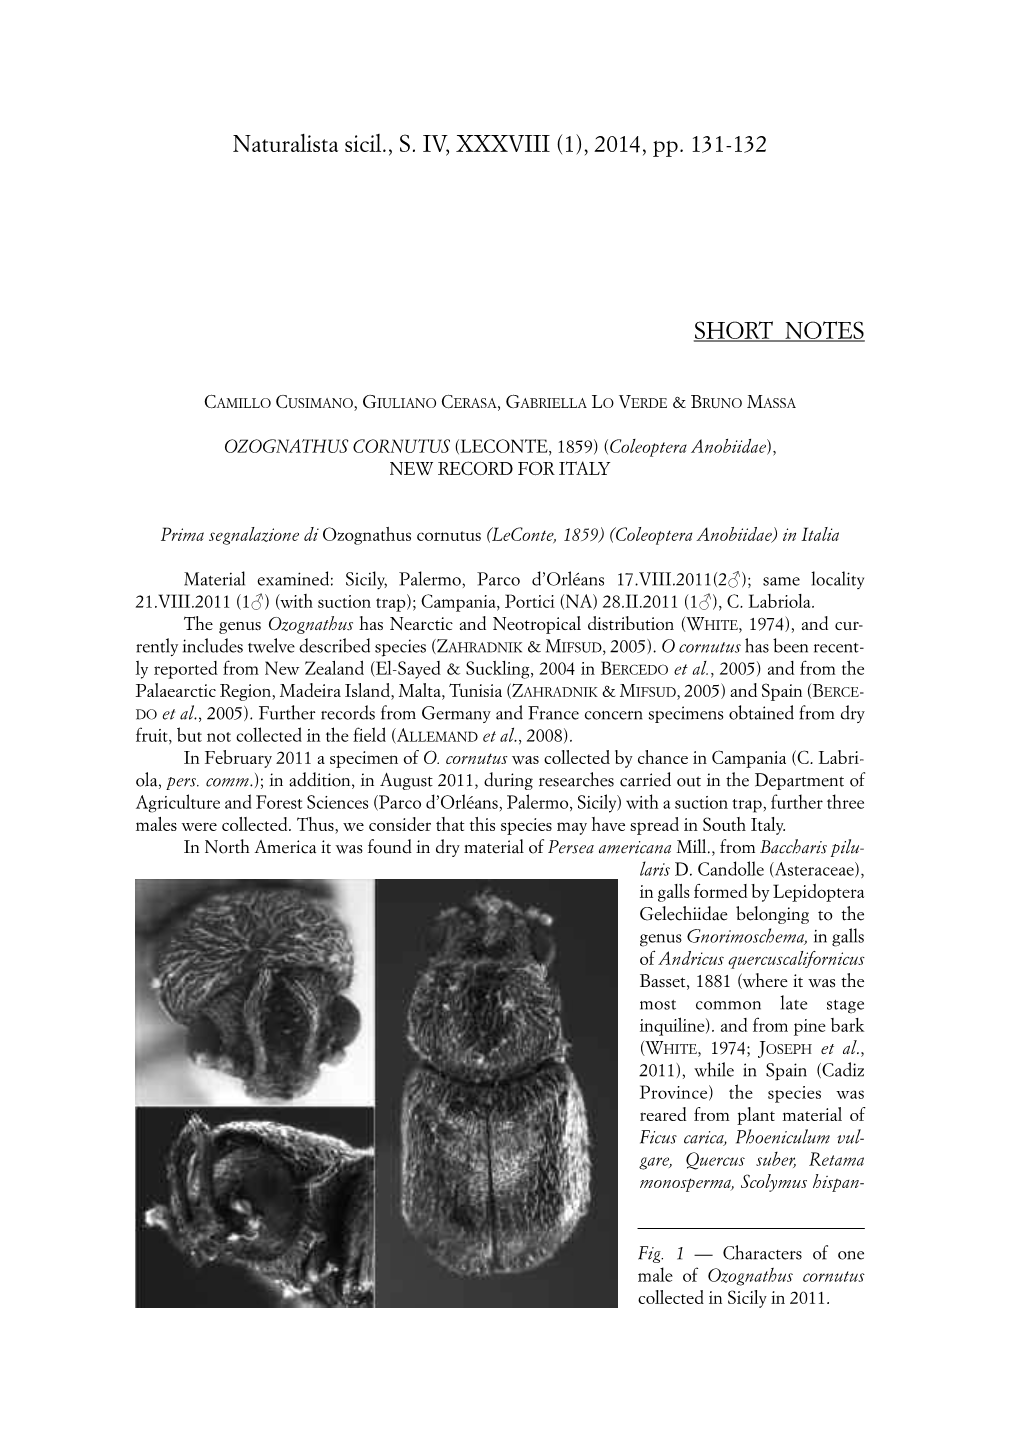 Naturalista Sicil., S. IV, XXXVIII (1), 2014, Pp. 131-132 SHORT NOTES